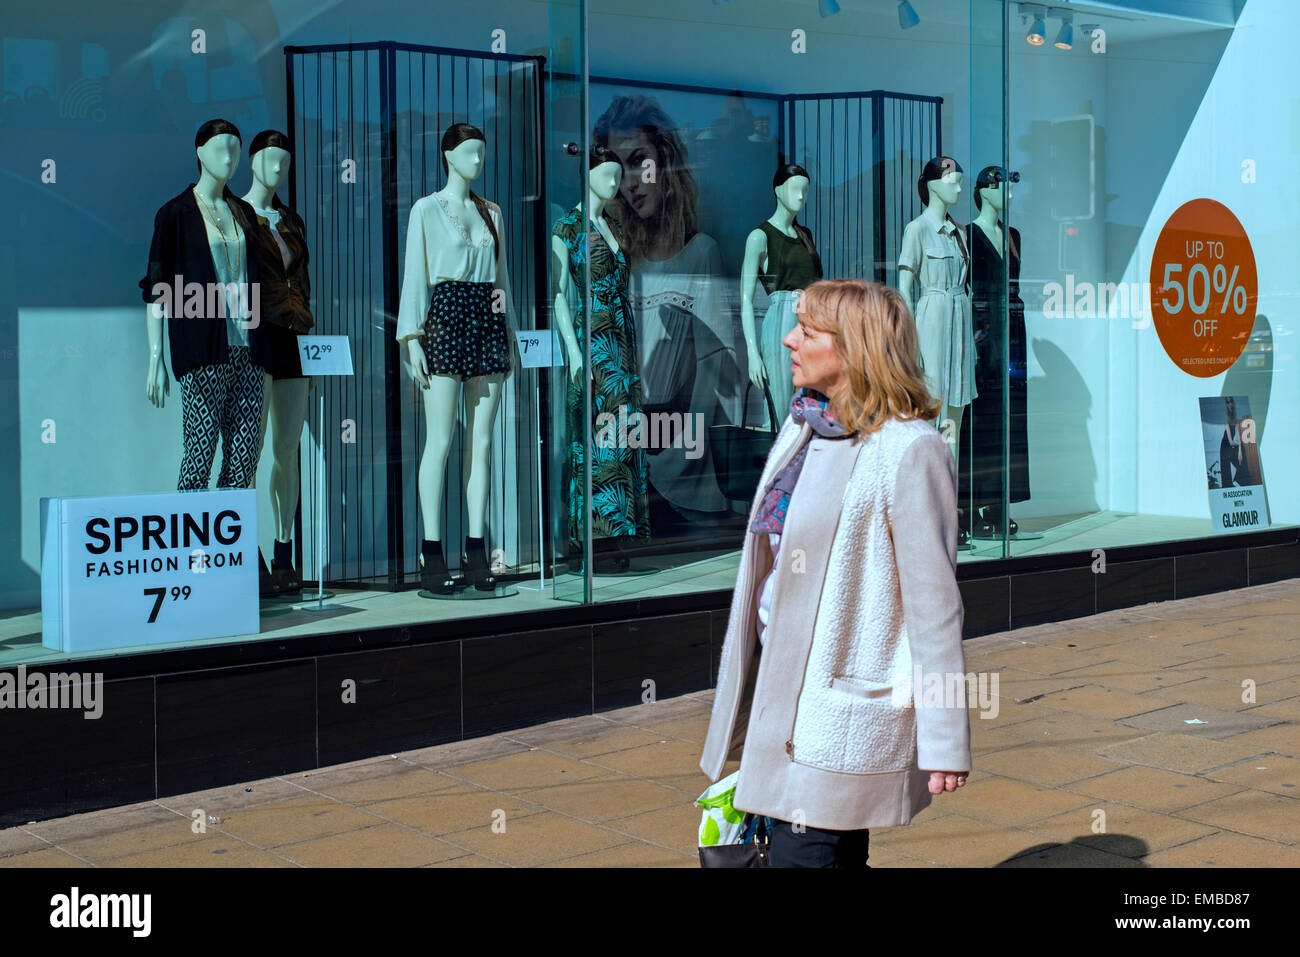 A lone middle-aged woman walks by a window display of Spring fashion on Princes Street, Edinburgh, Scotland. Stock Photo